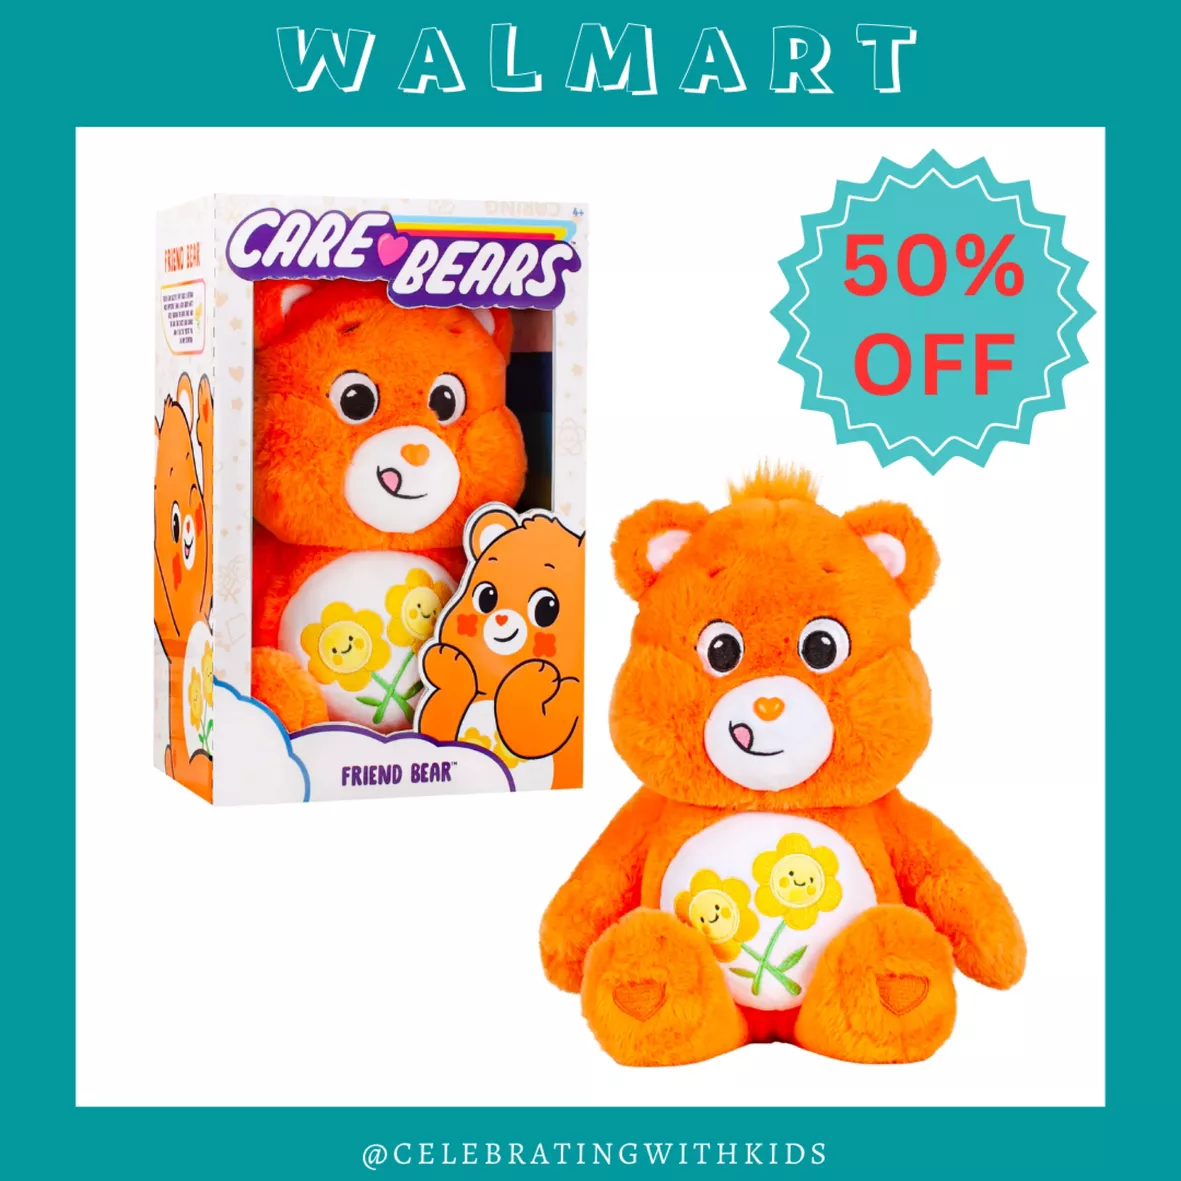 Care Bears 14 Plush - Friend Bear - Soft Huggable Material